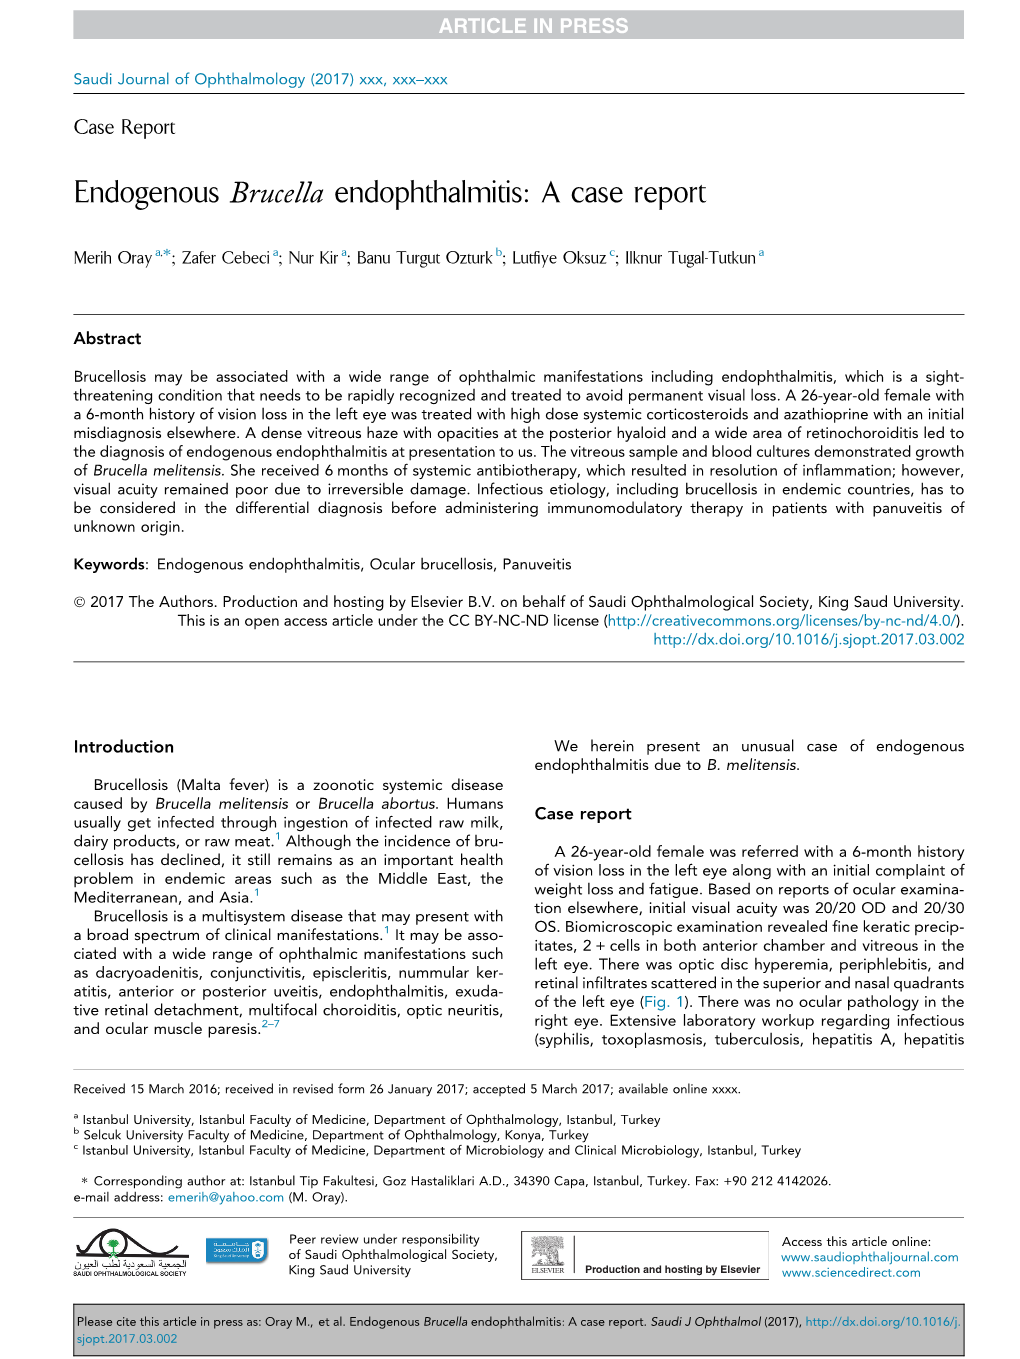 Endogenous Brucella Endophthalmitis: a Case Report